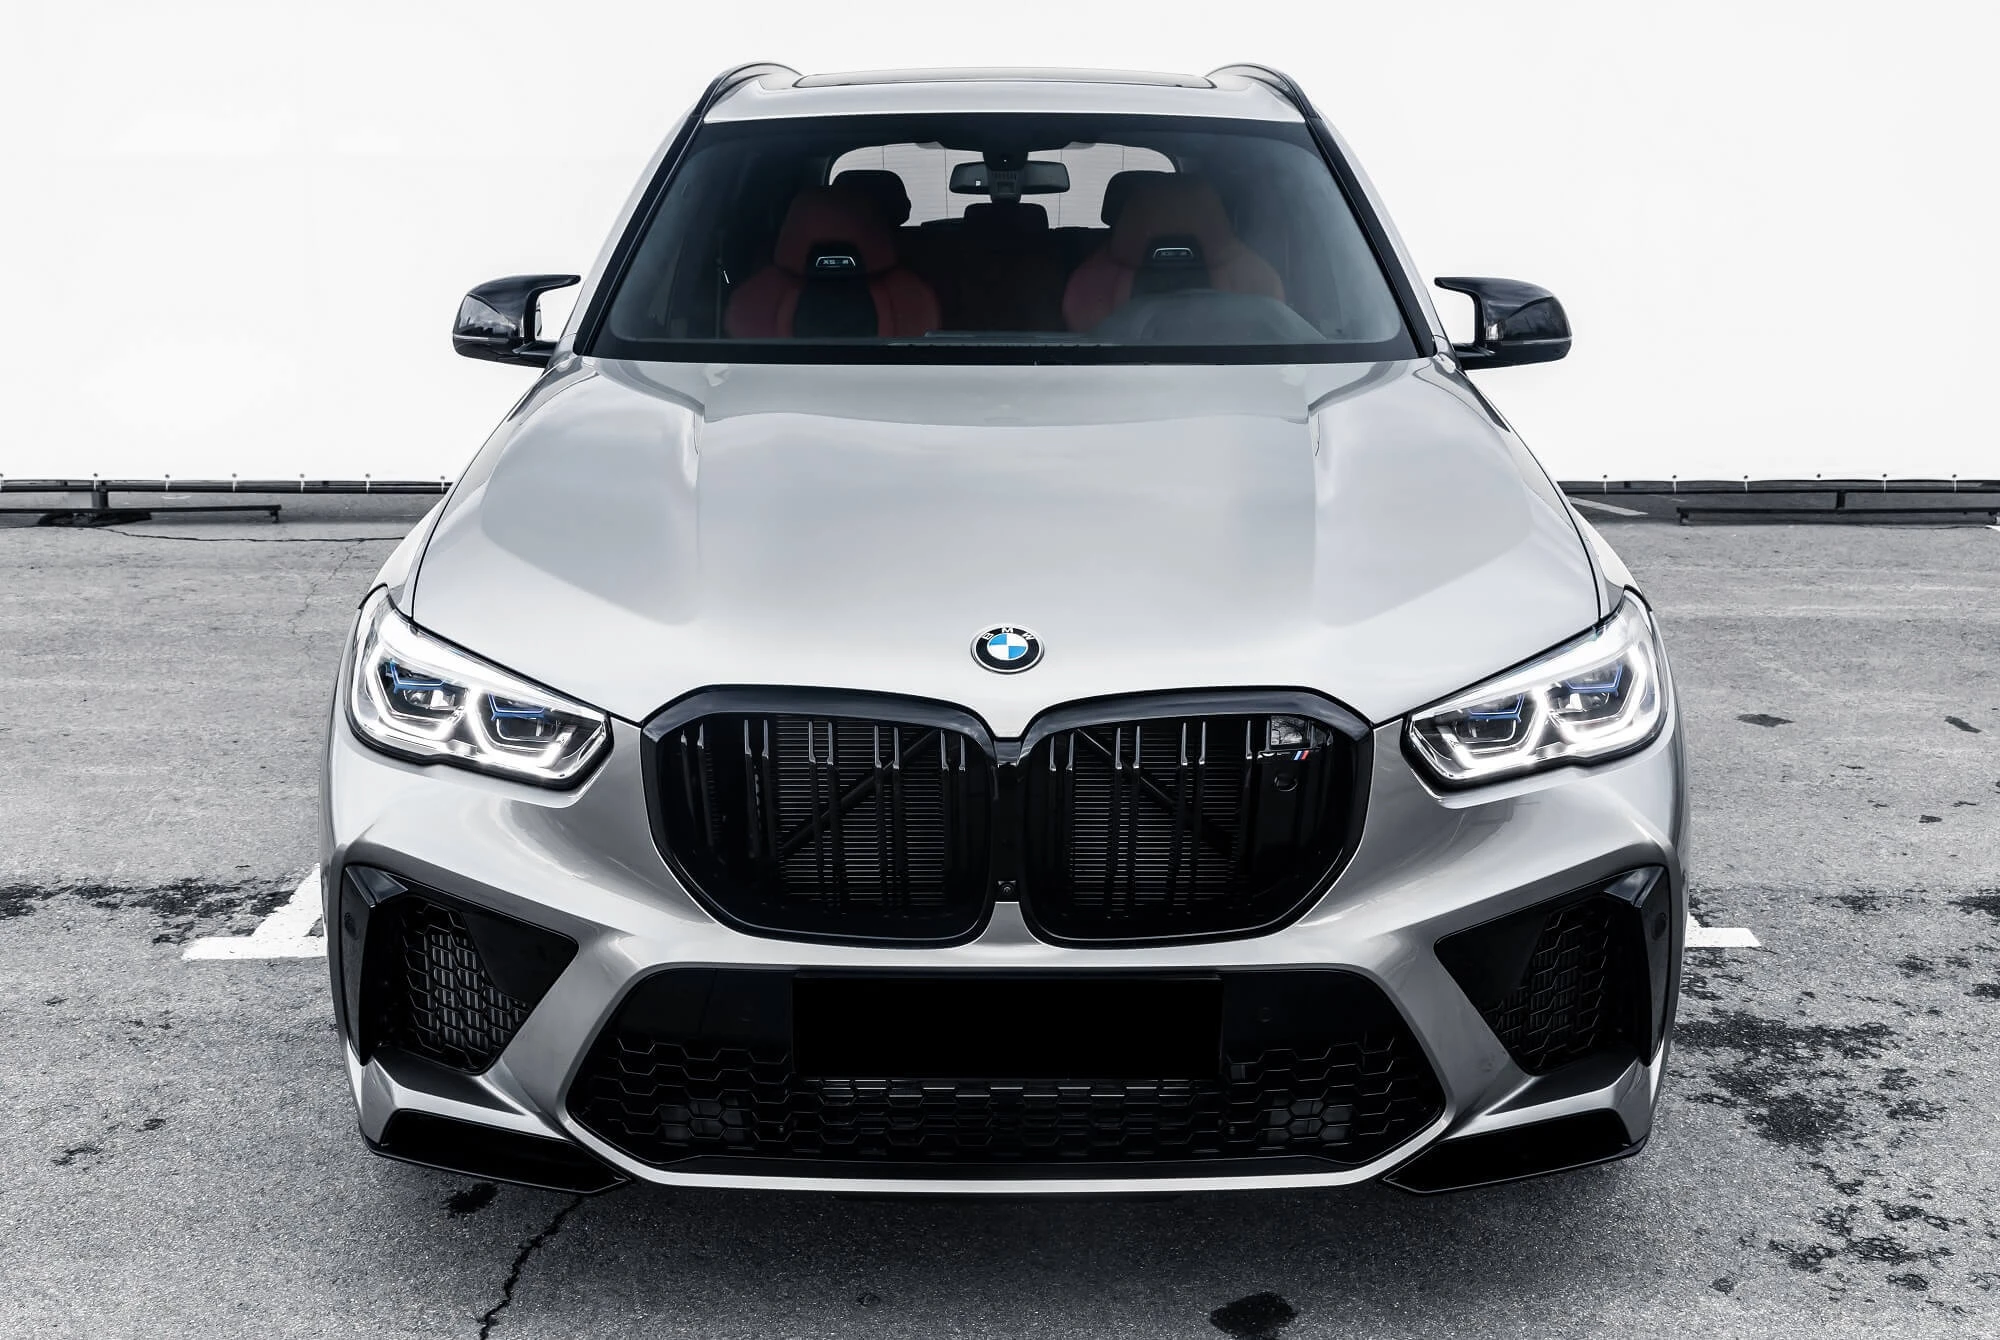 BMW X5 M Silver